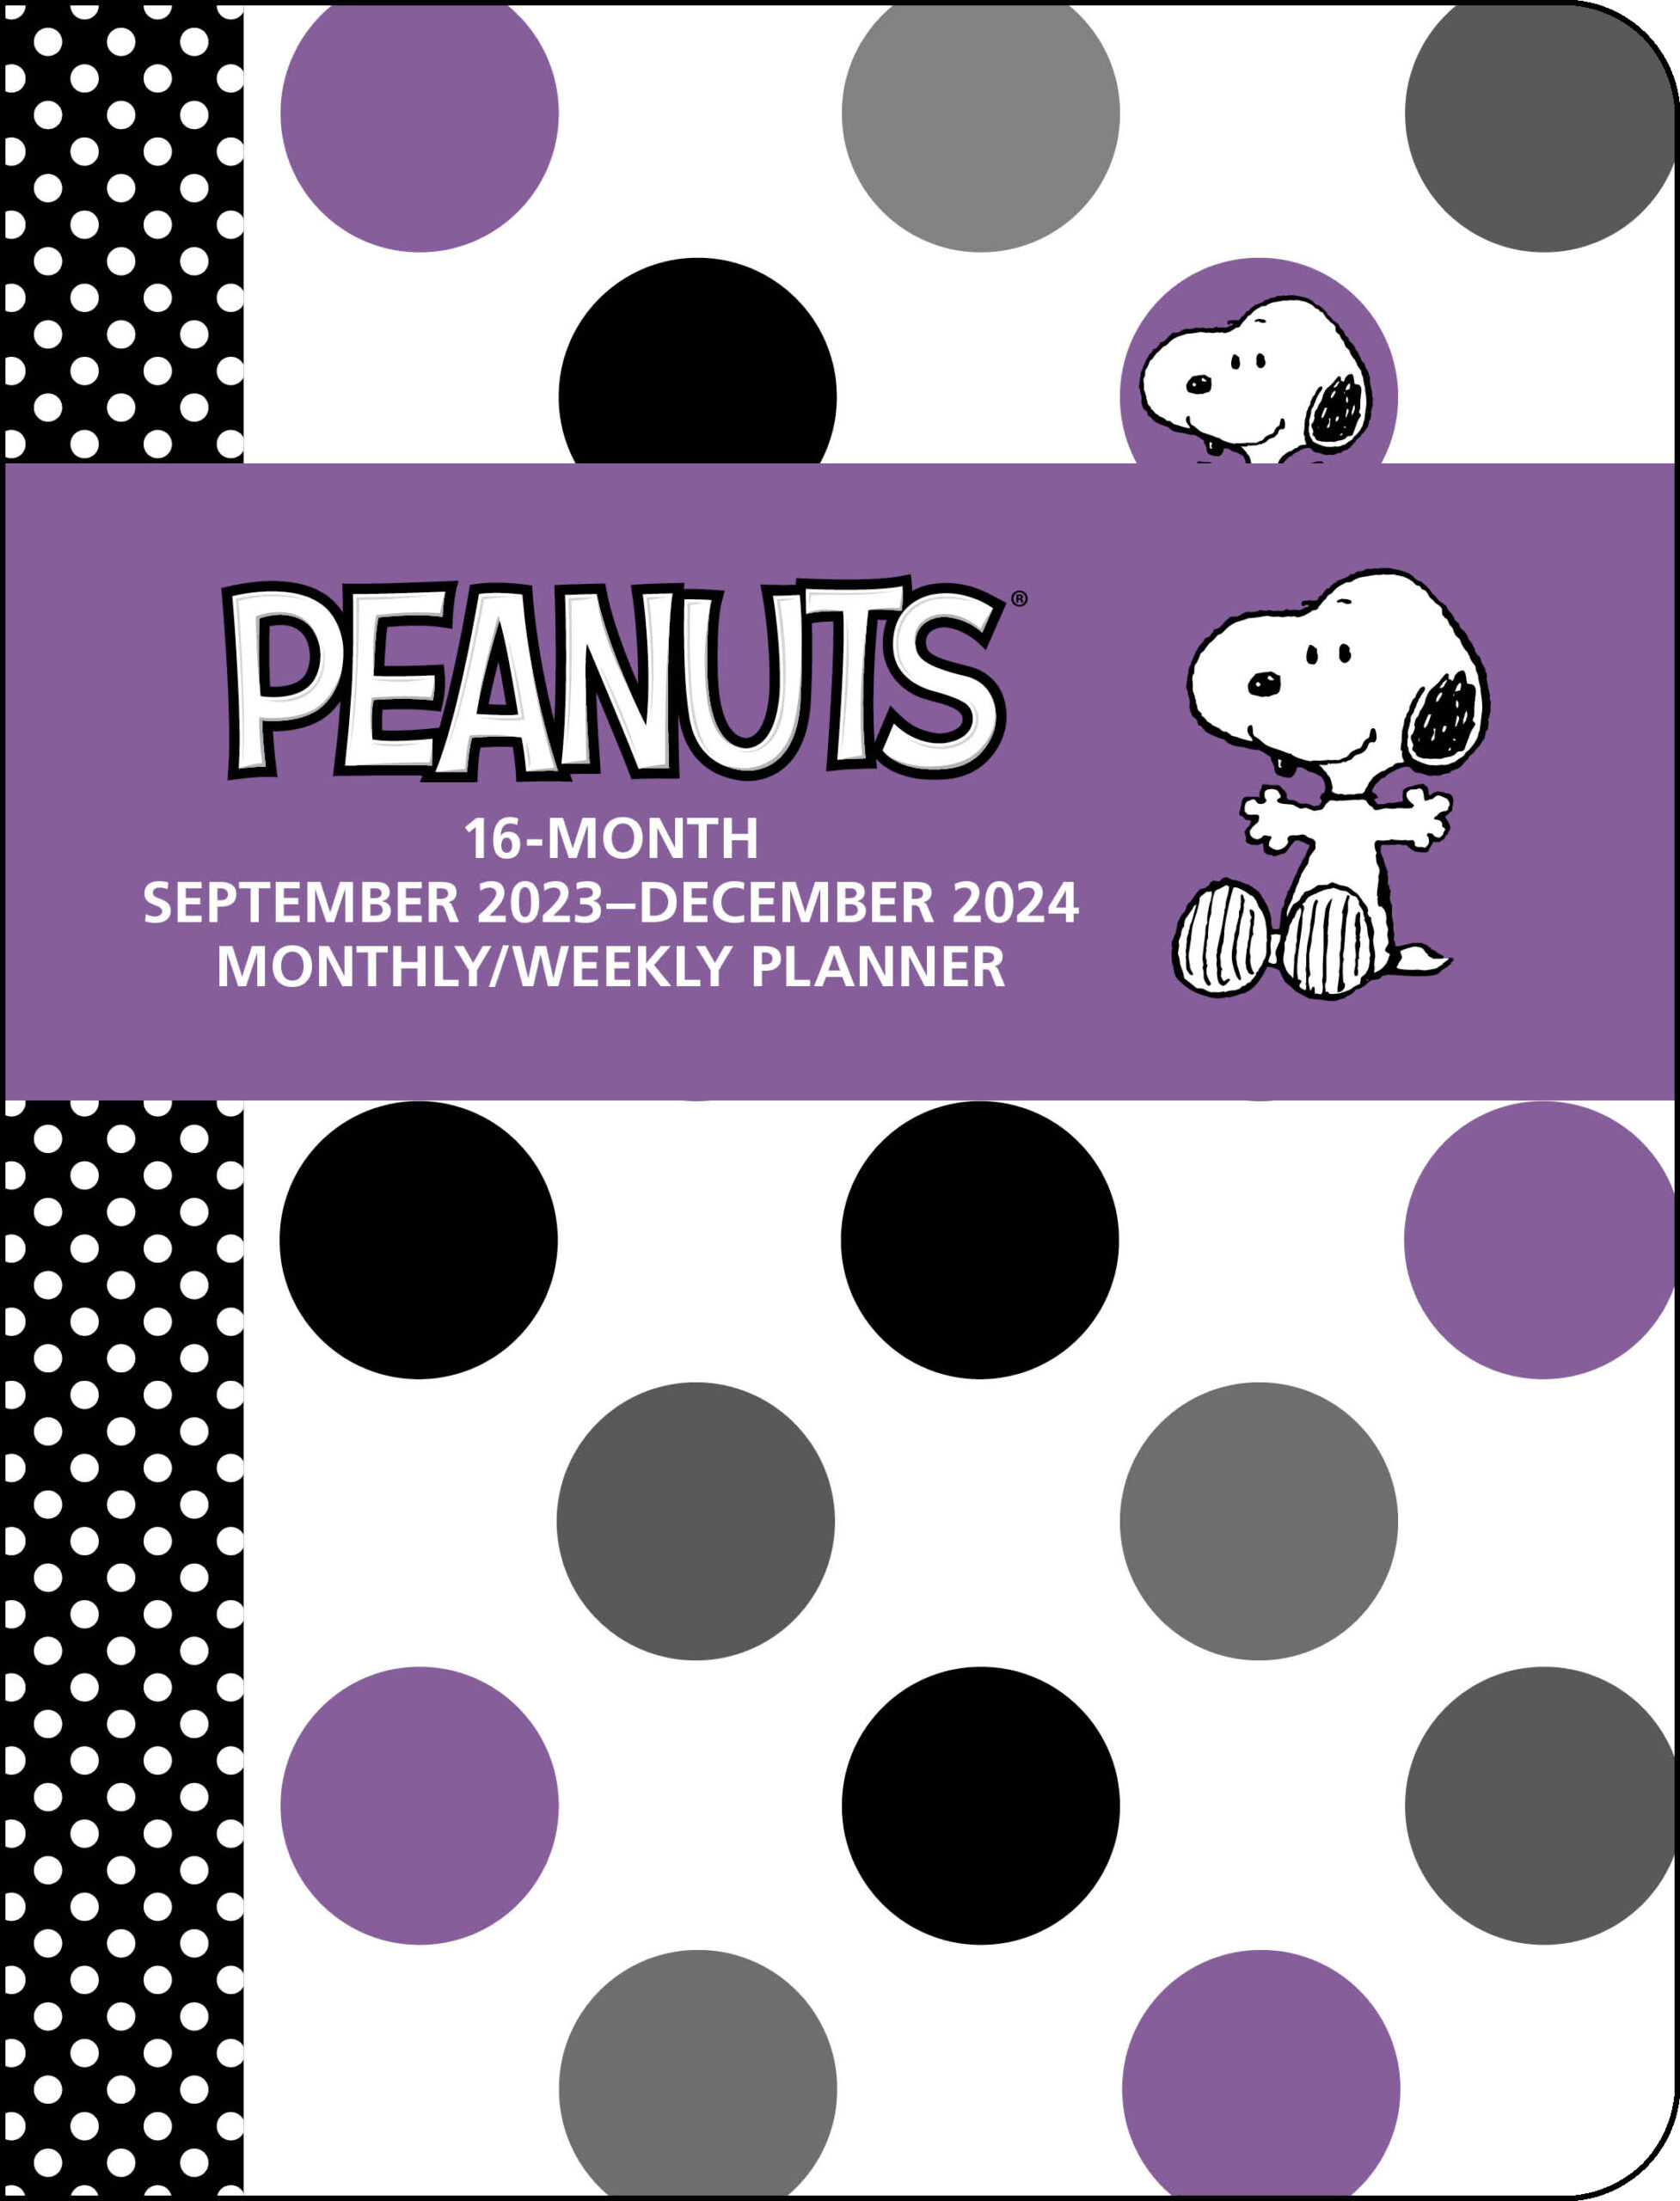 2023-2024　Peanuts　Planner　GoComics　Calendar　Store　16-Month　Monthly/Weekly